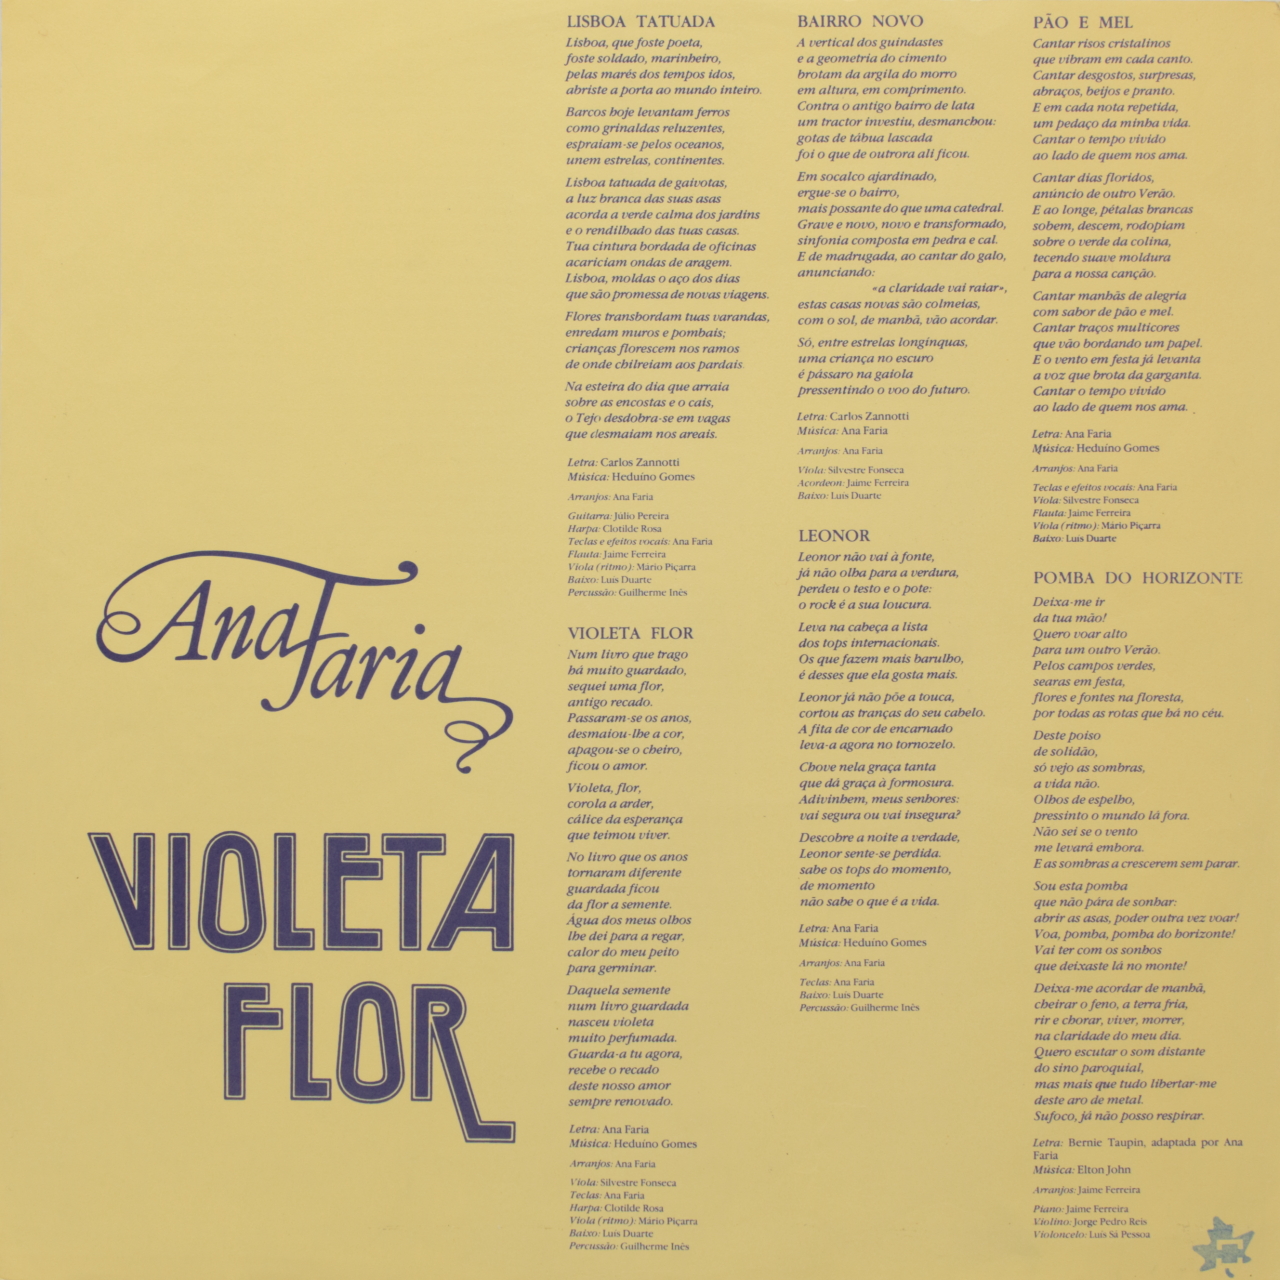 Violeta Flor